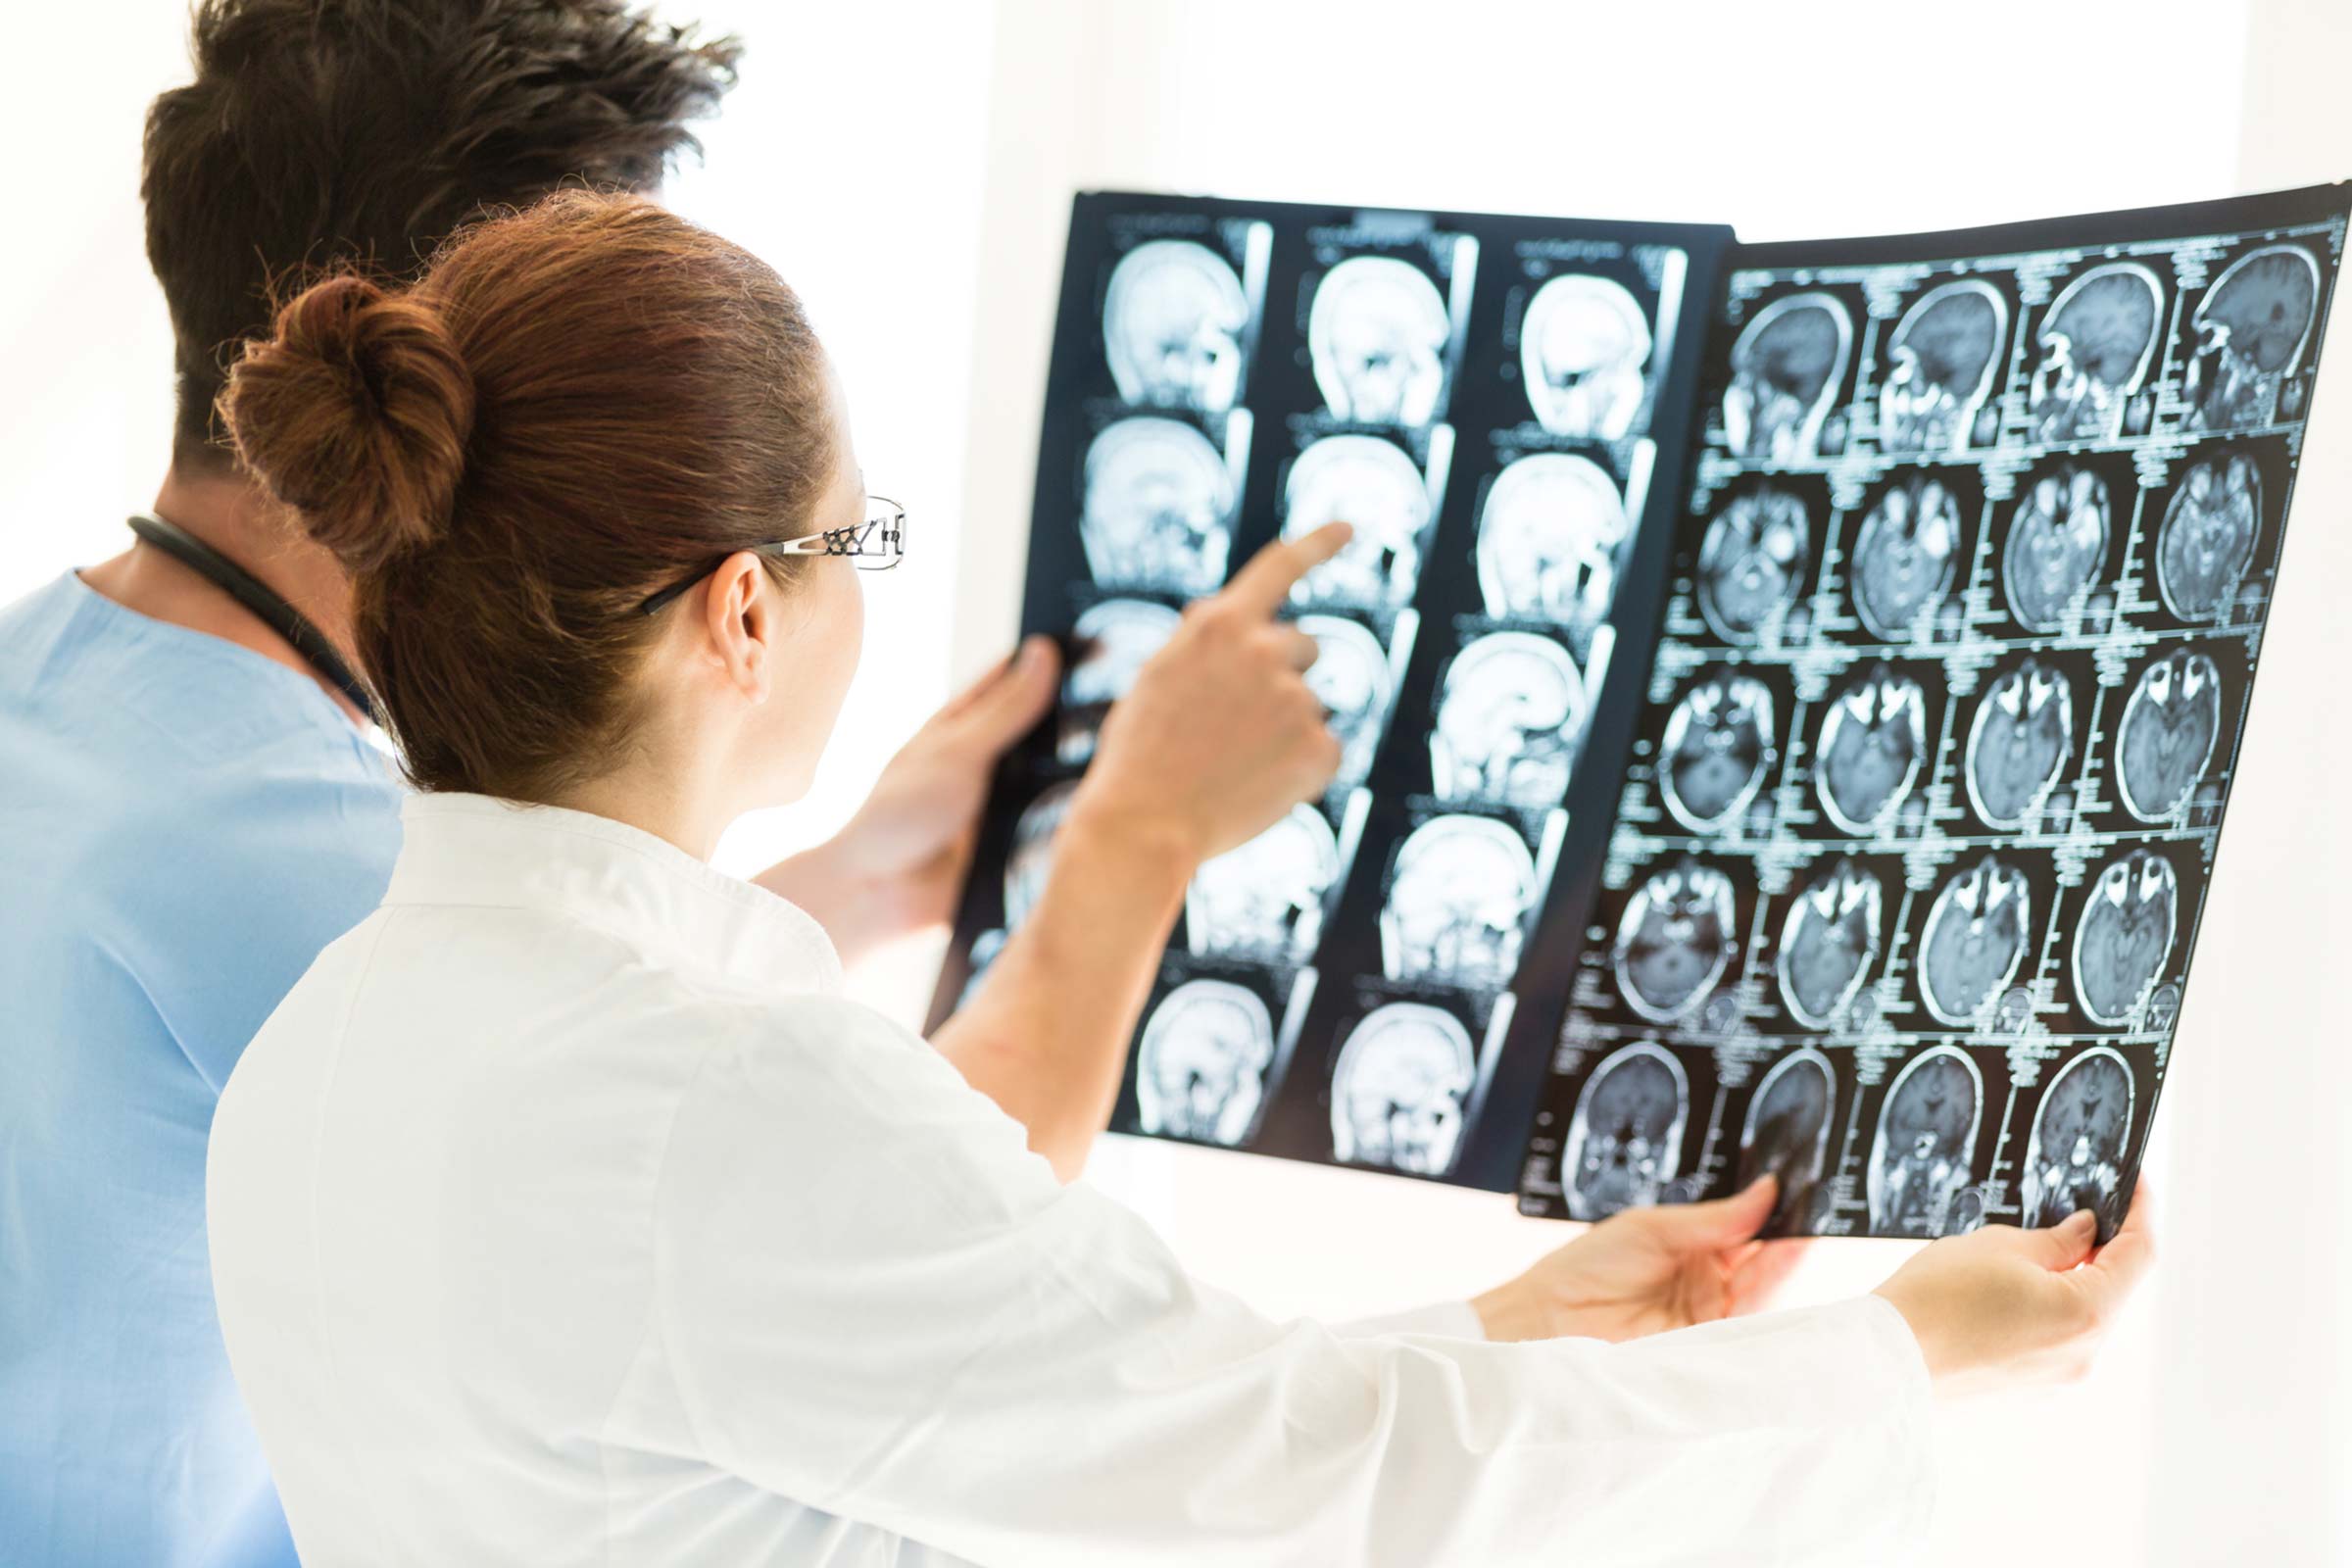 Skoltech has developed a new method for determining children's intelligence by brain MRI